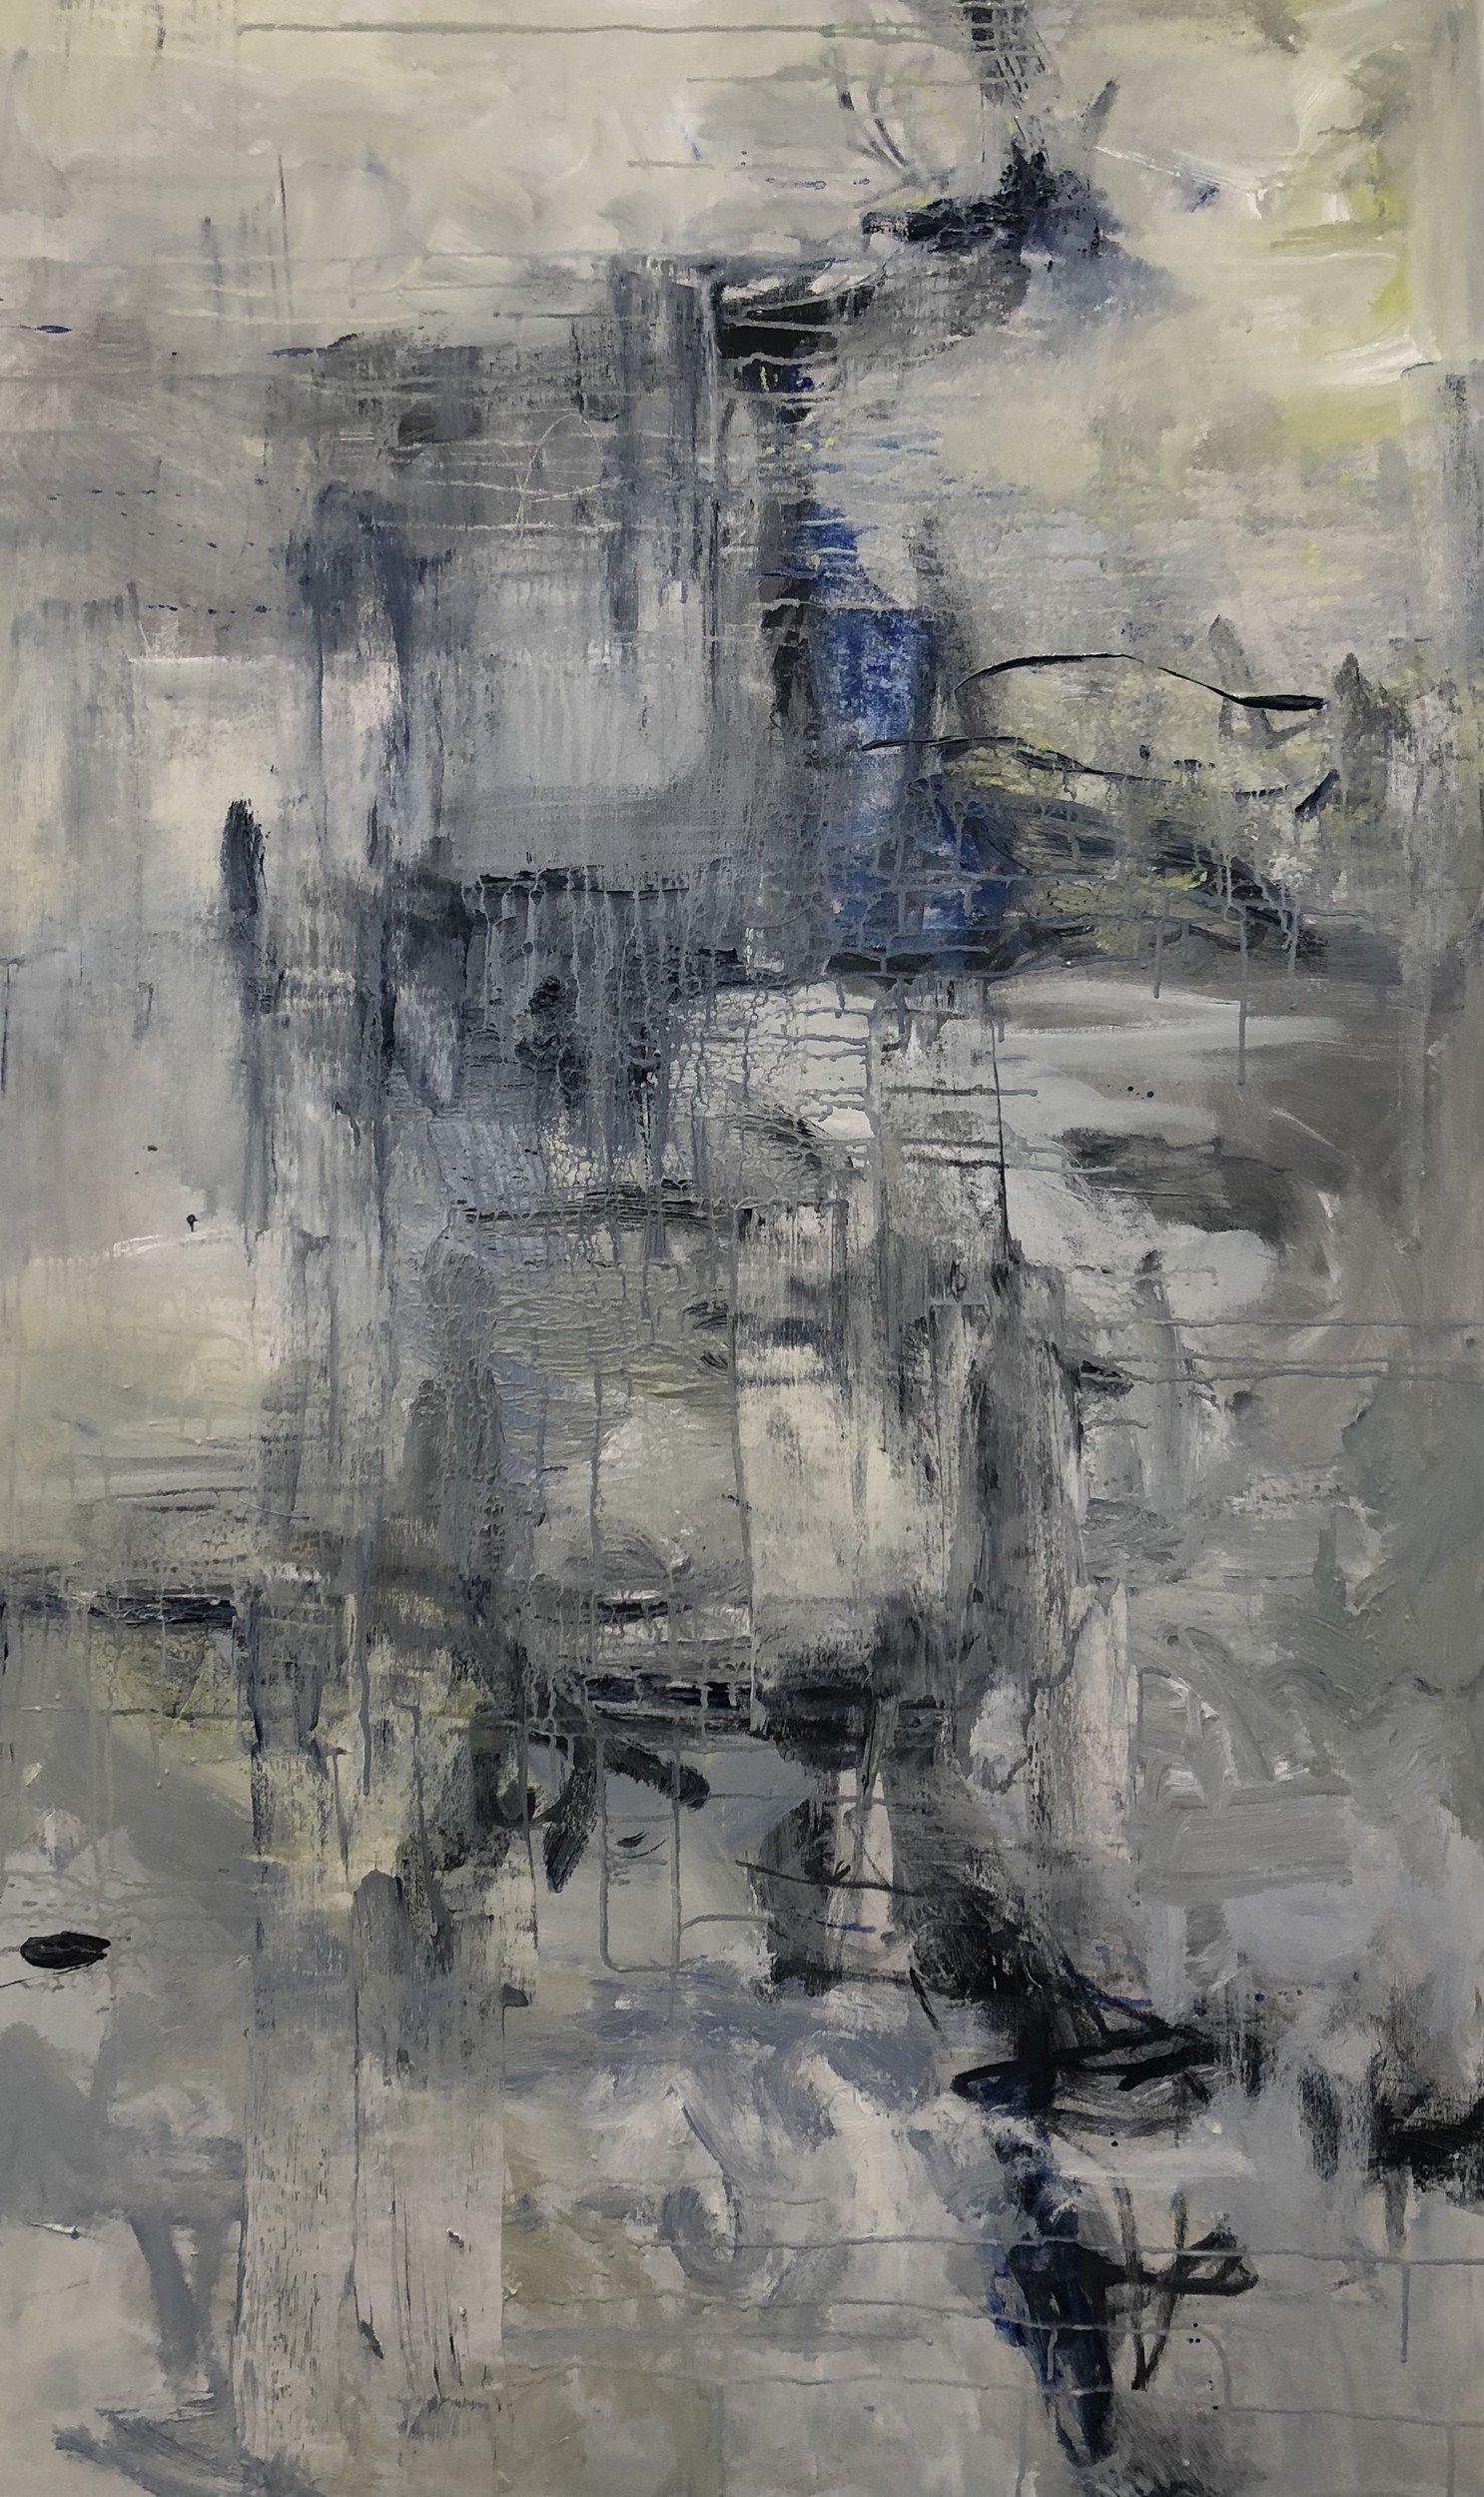 Juanita Bellavance  Abstract Painting – Luminous breakthrough, Abstrakter Expressionismus, blau, weiß, grau, schwarz